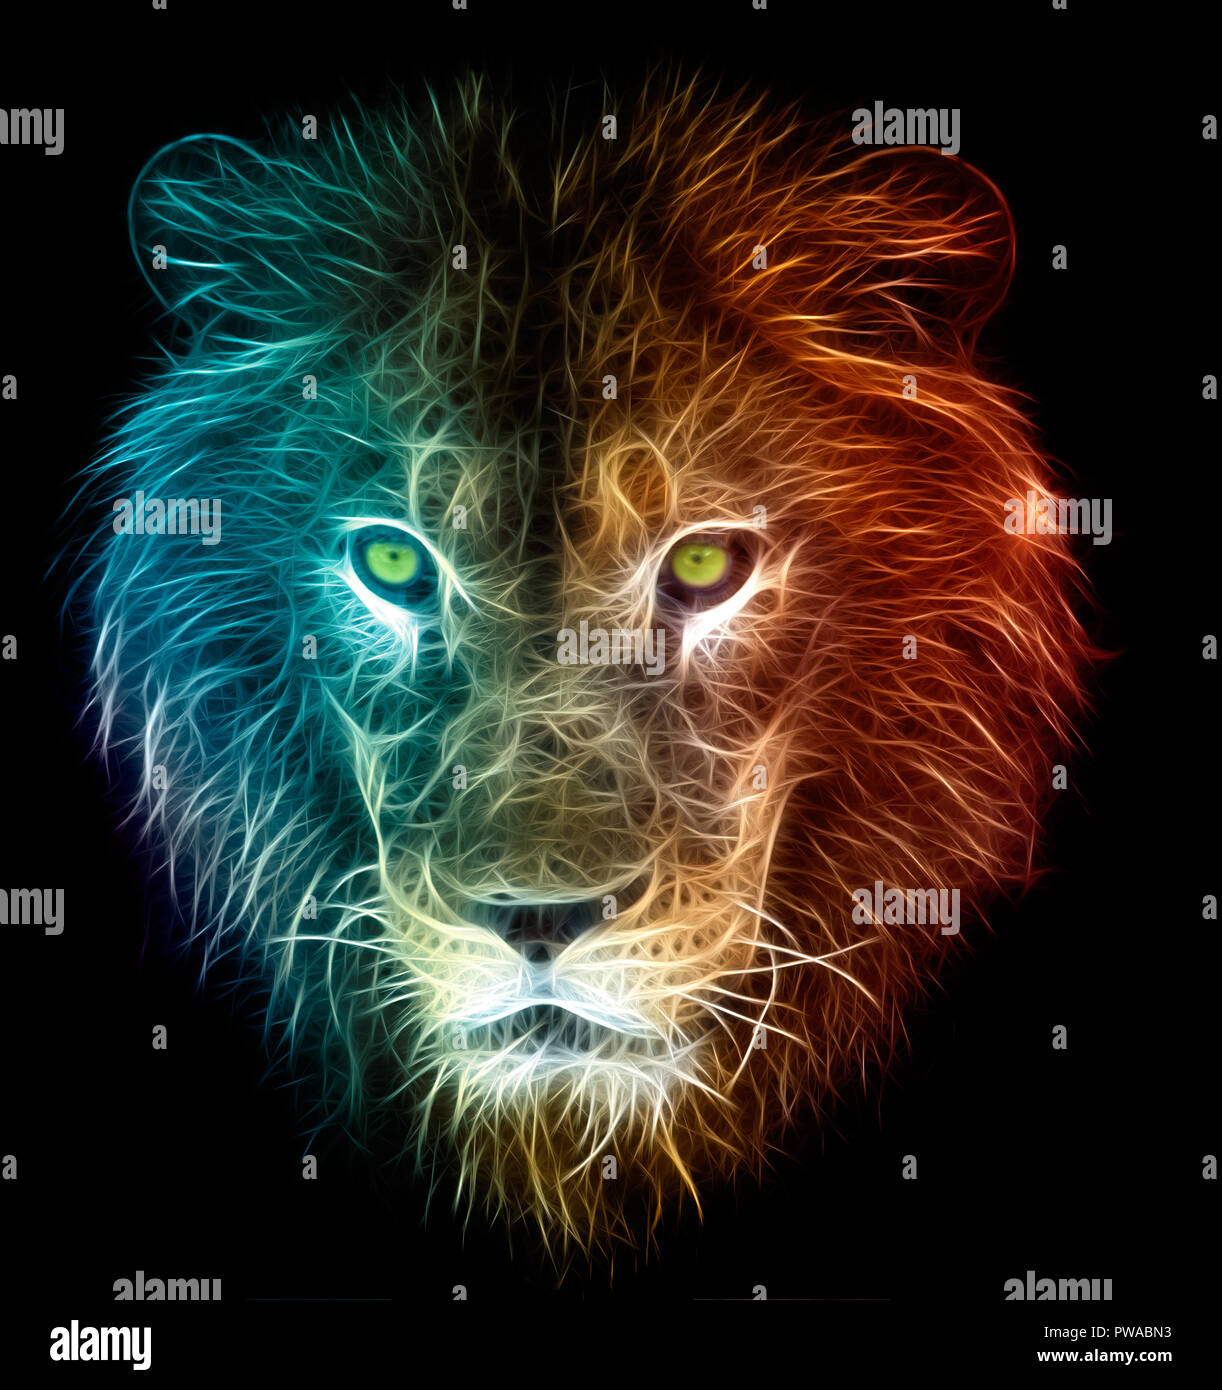 Digital illustration of a lion Stock Photo